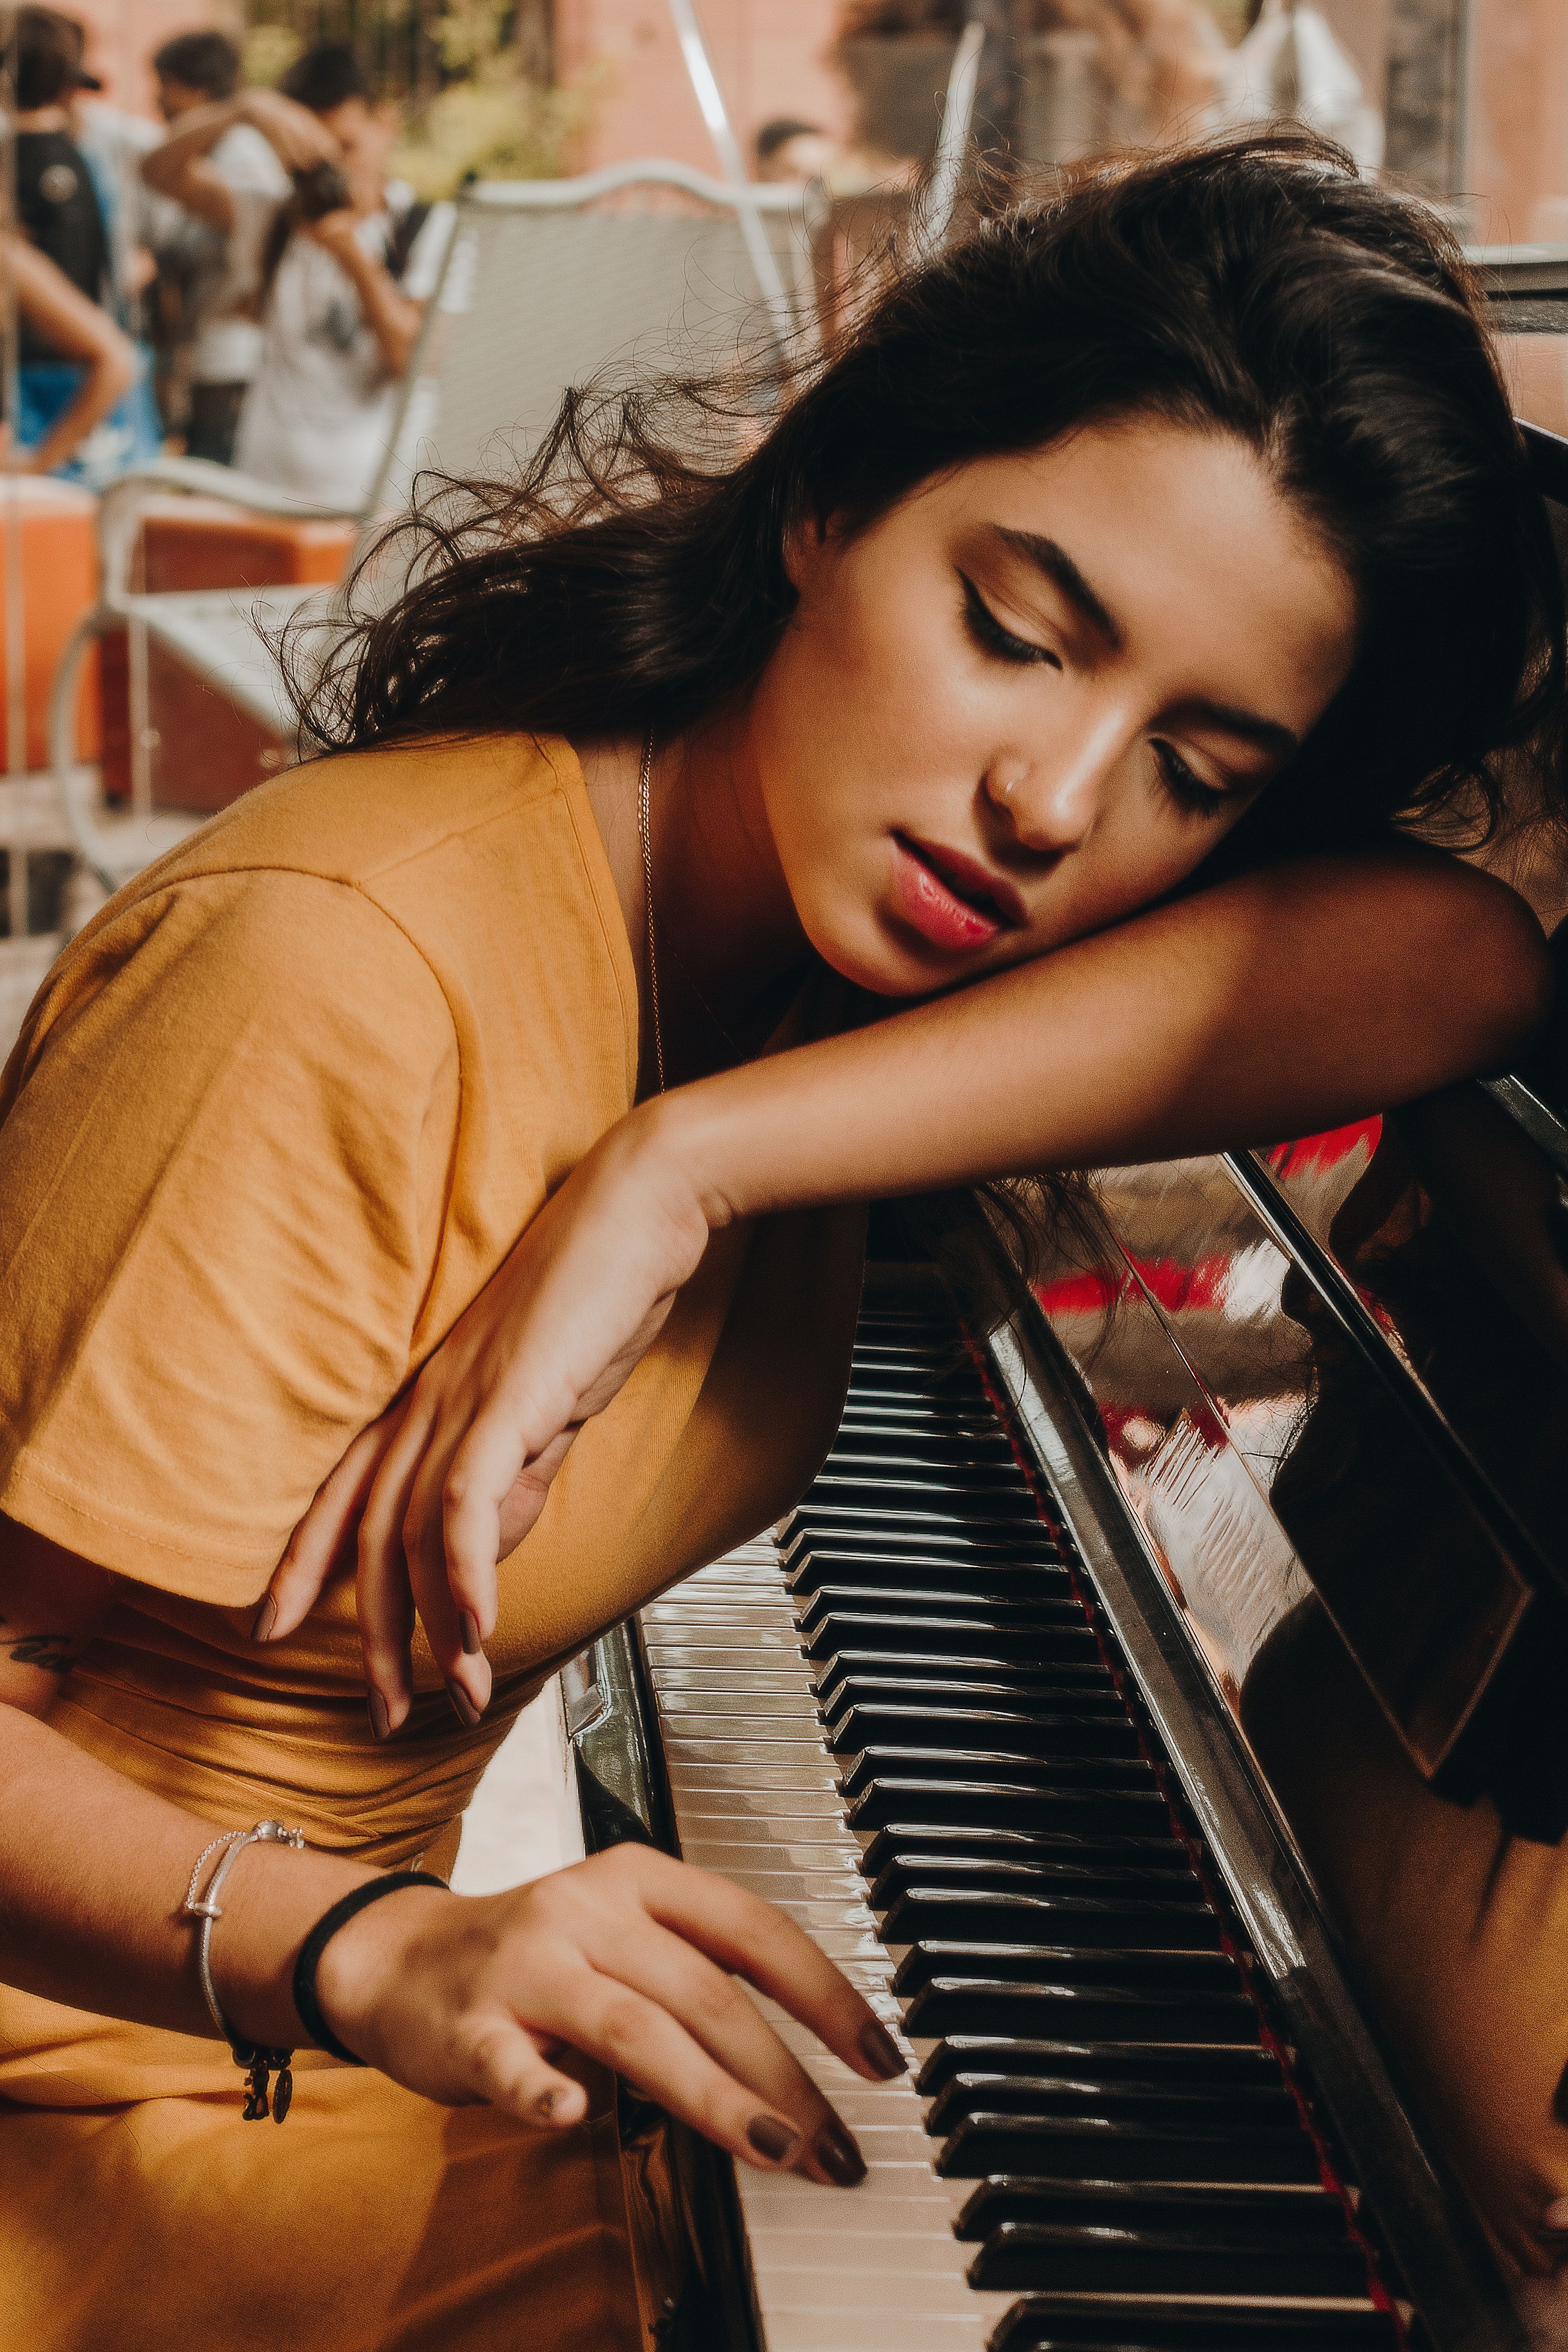 Woman Lying Her Head on Piano · Free